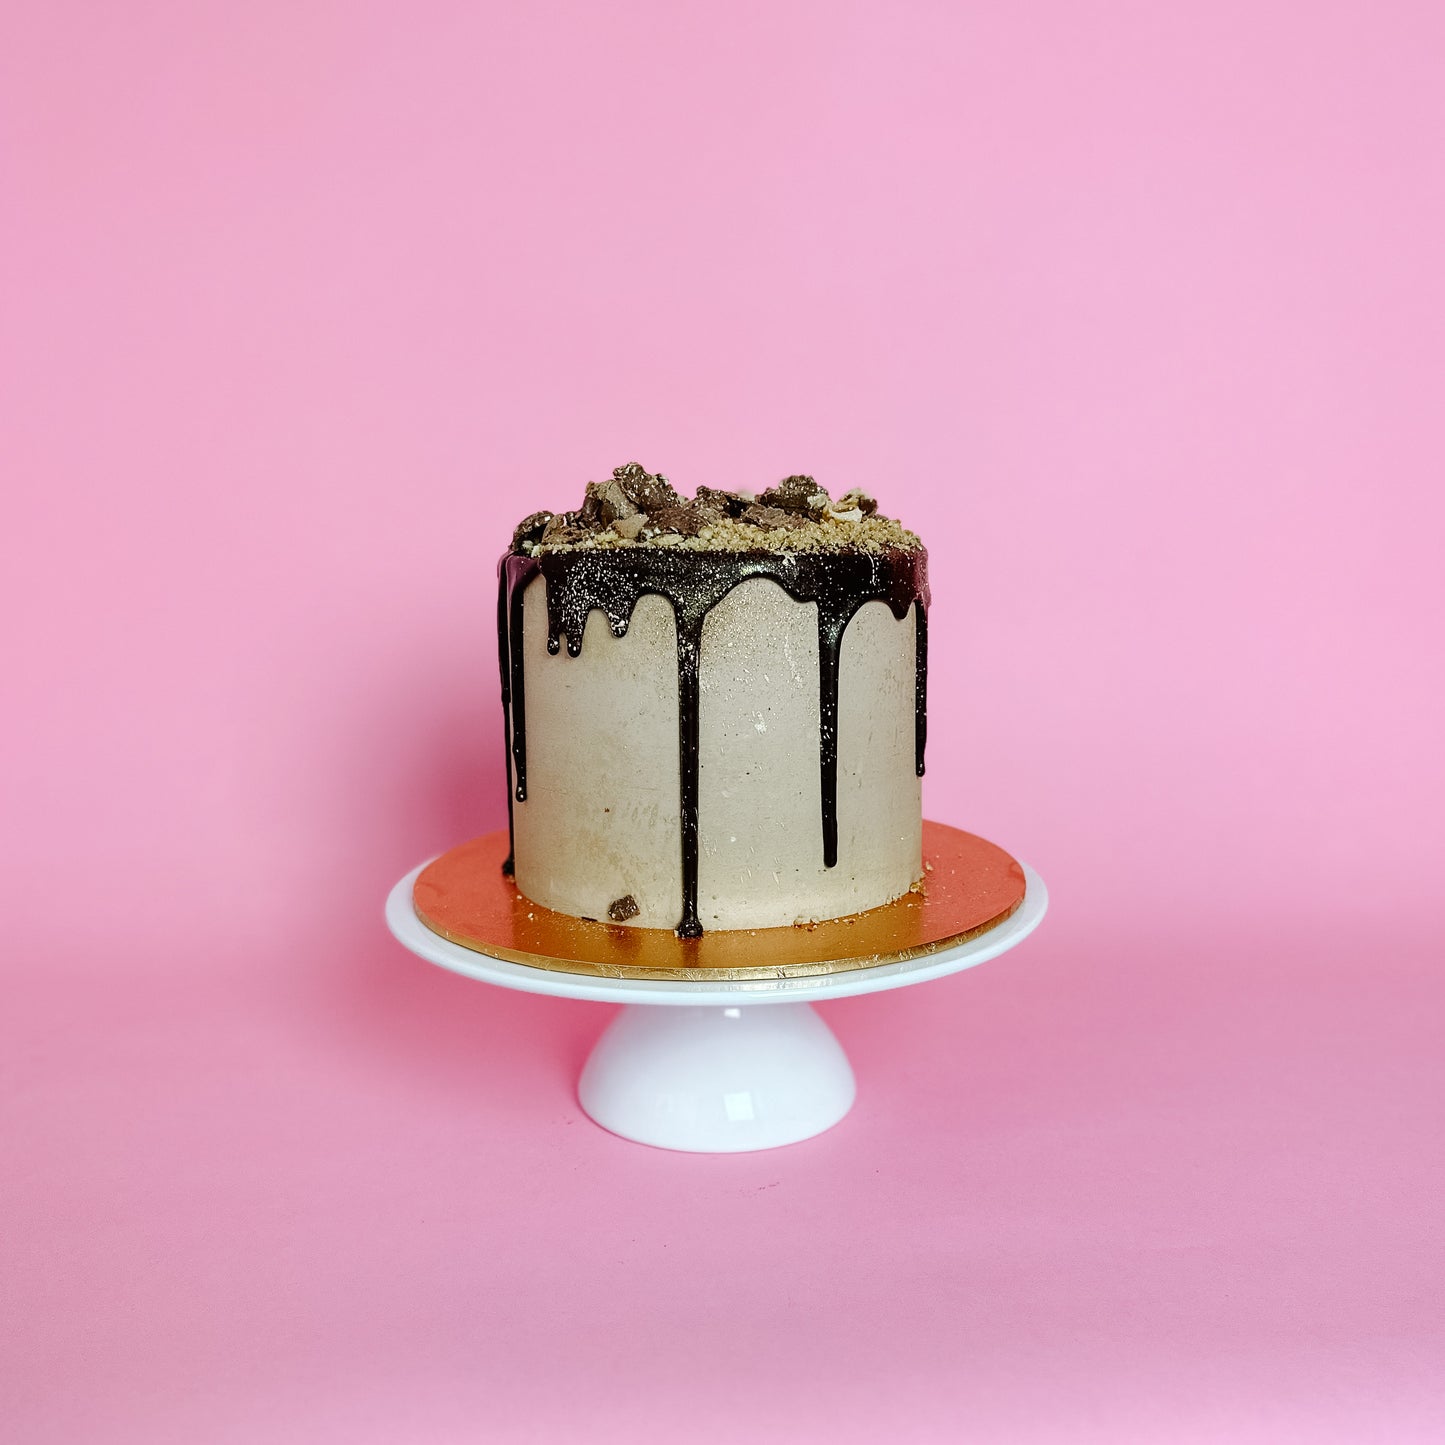 Chocolate Hazelnut Truffle Cake